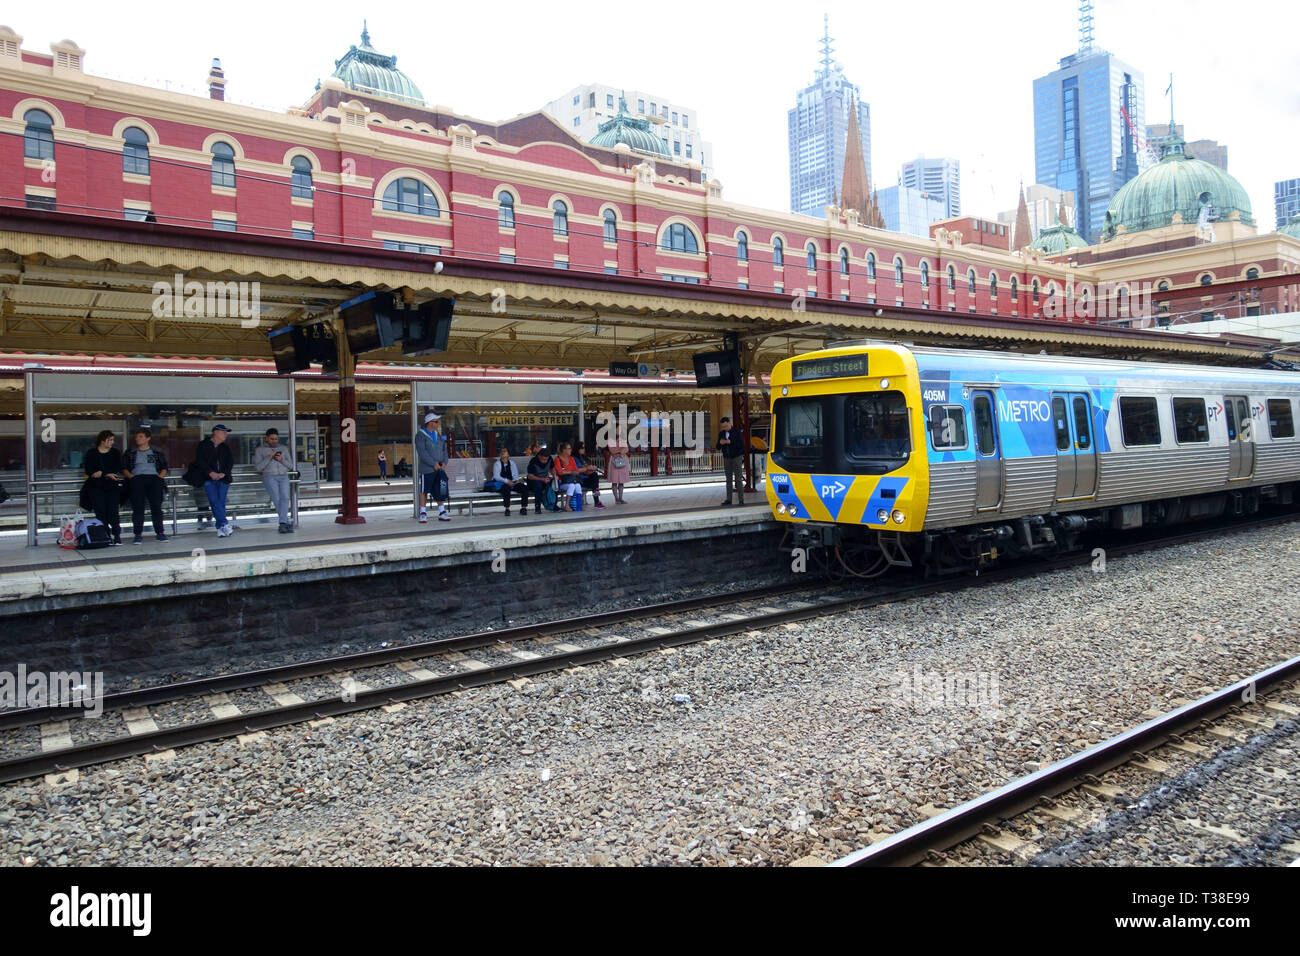 Metro Train at Flinders street Station, Melbourne Victoria Australia Stock Photo